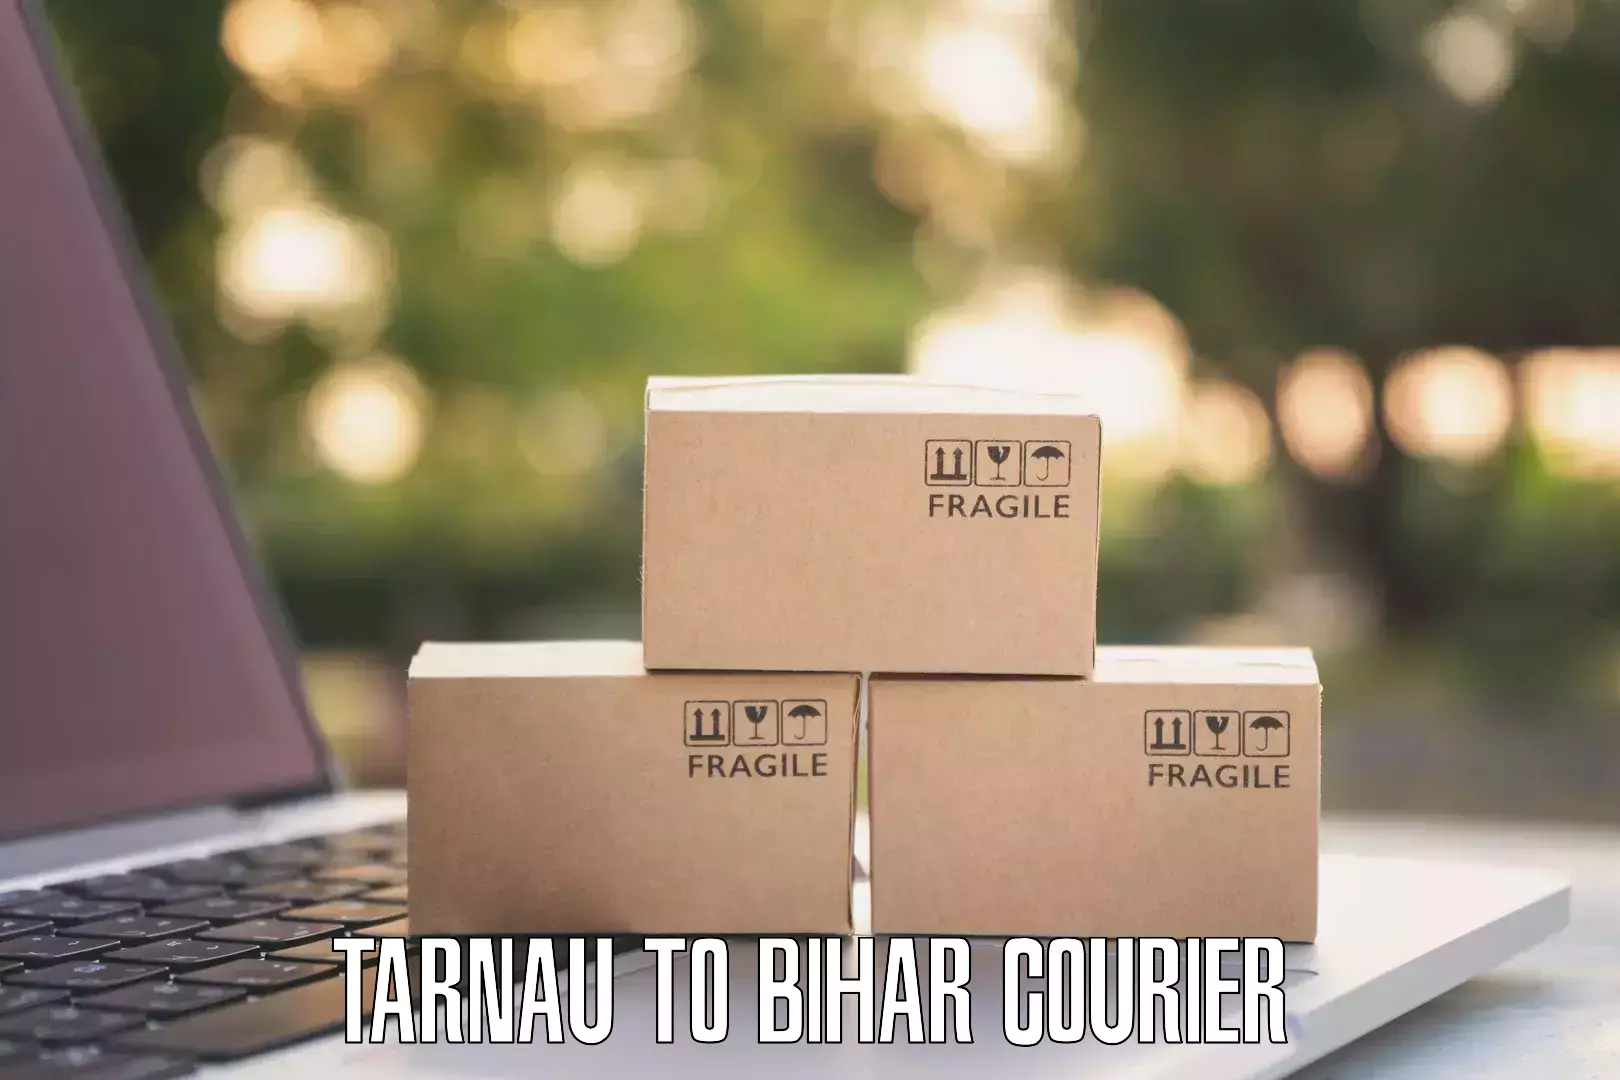 Urgent courier needs Tarnau to Bihar